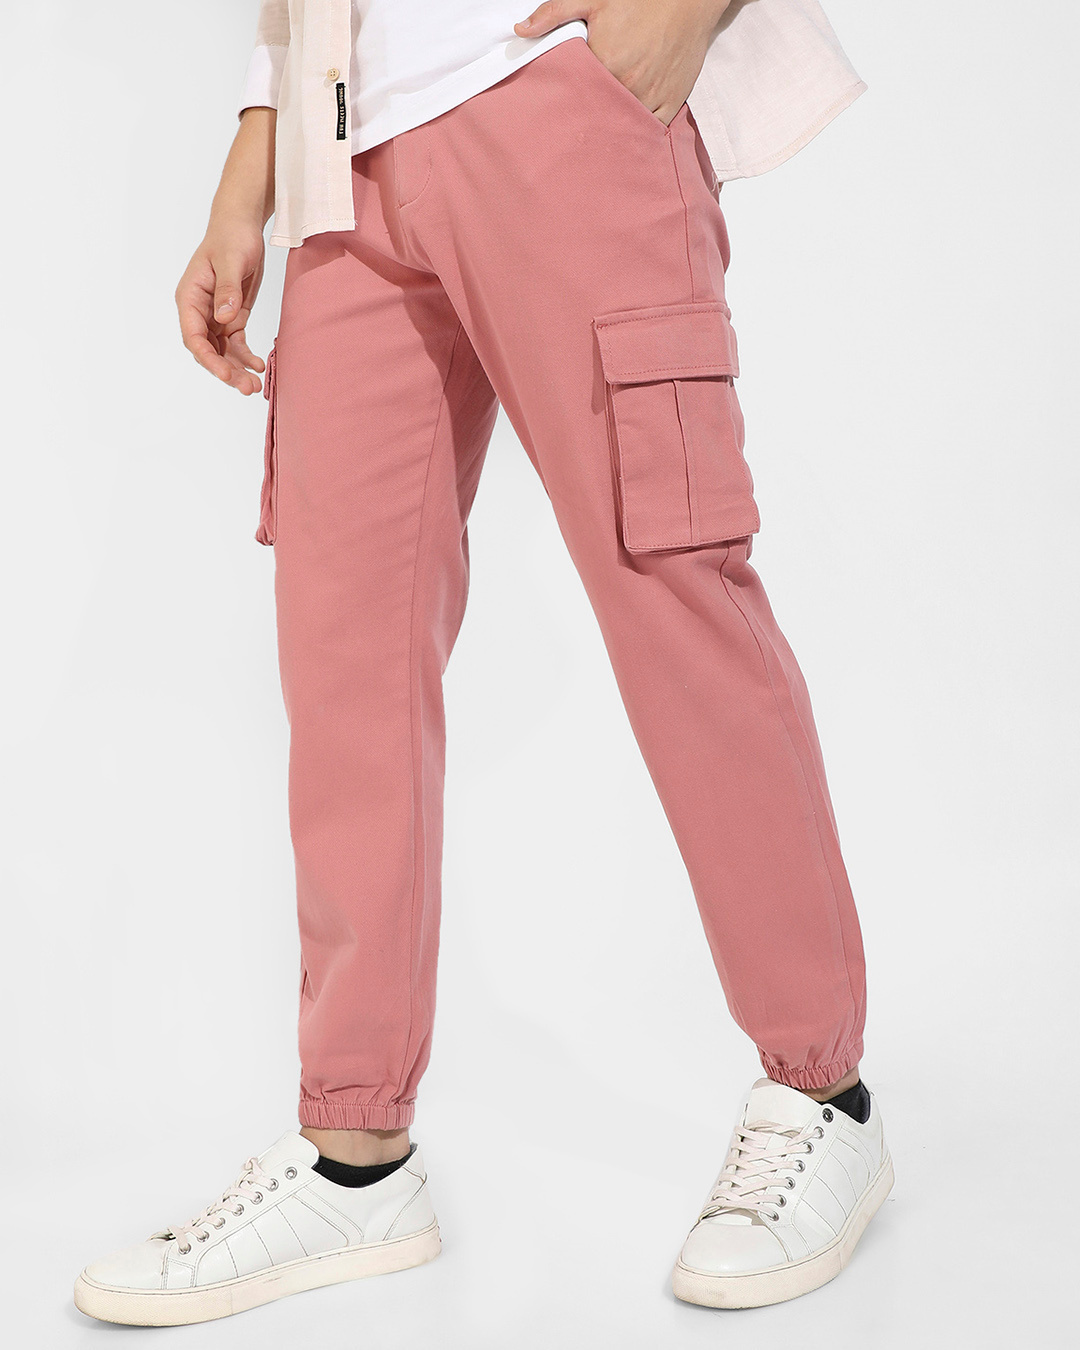 ASOS DESIGN oversized cargo trousers in pink camo  ASOS